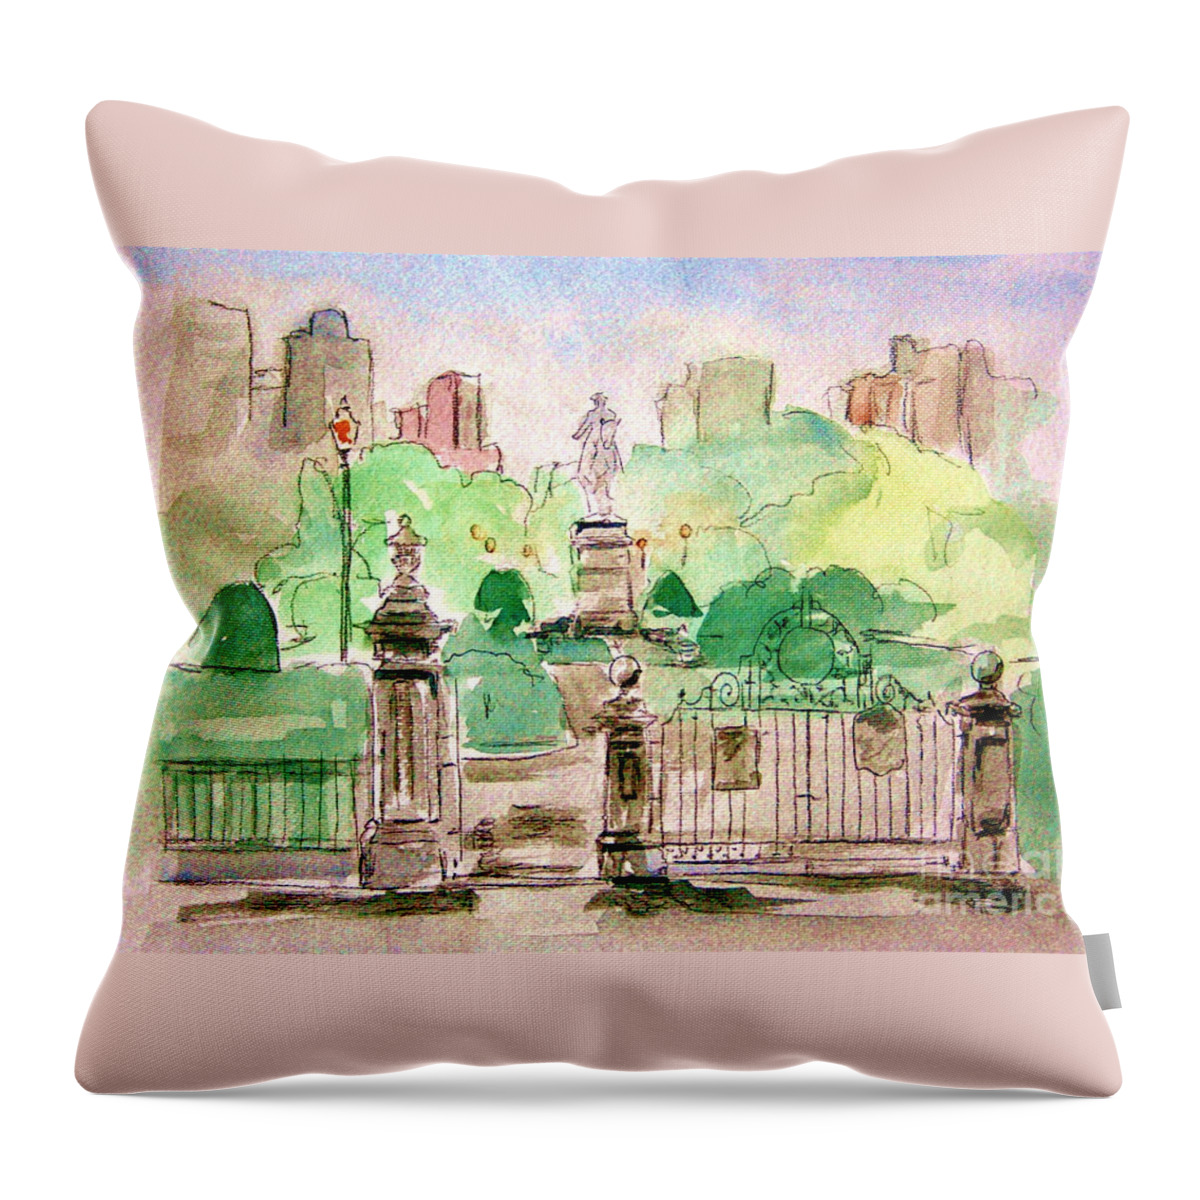 Boston Public Gardens Throw Pillow featuring the painting Boston Public Gardens by Julie Lueders 